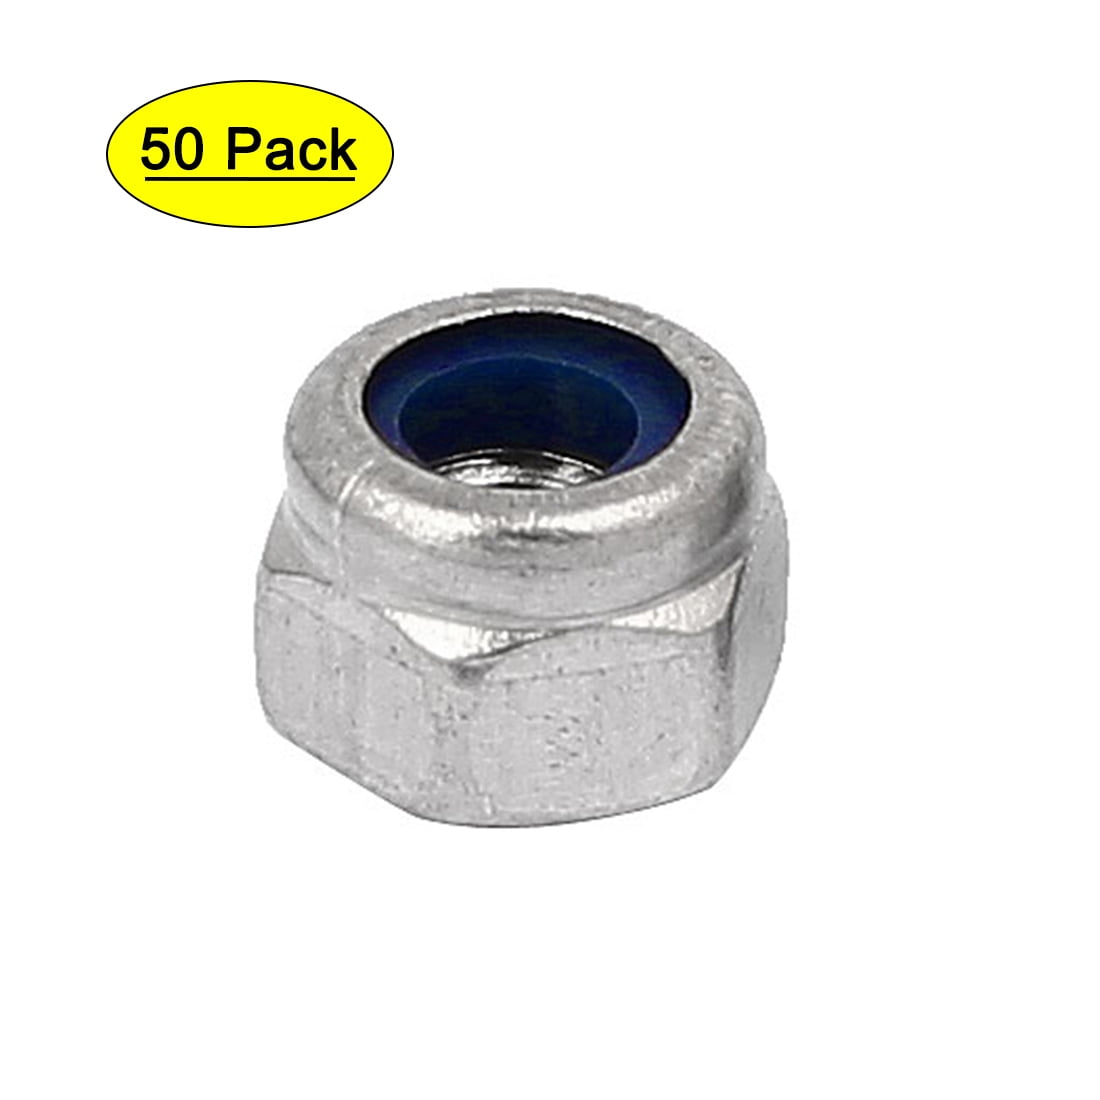 Nylon Insert Flange Lock Nut 304 Stainless Steel Grade 2 Metric Coarse For Bolts 